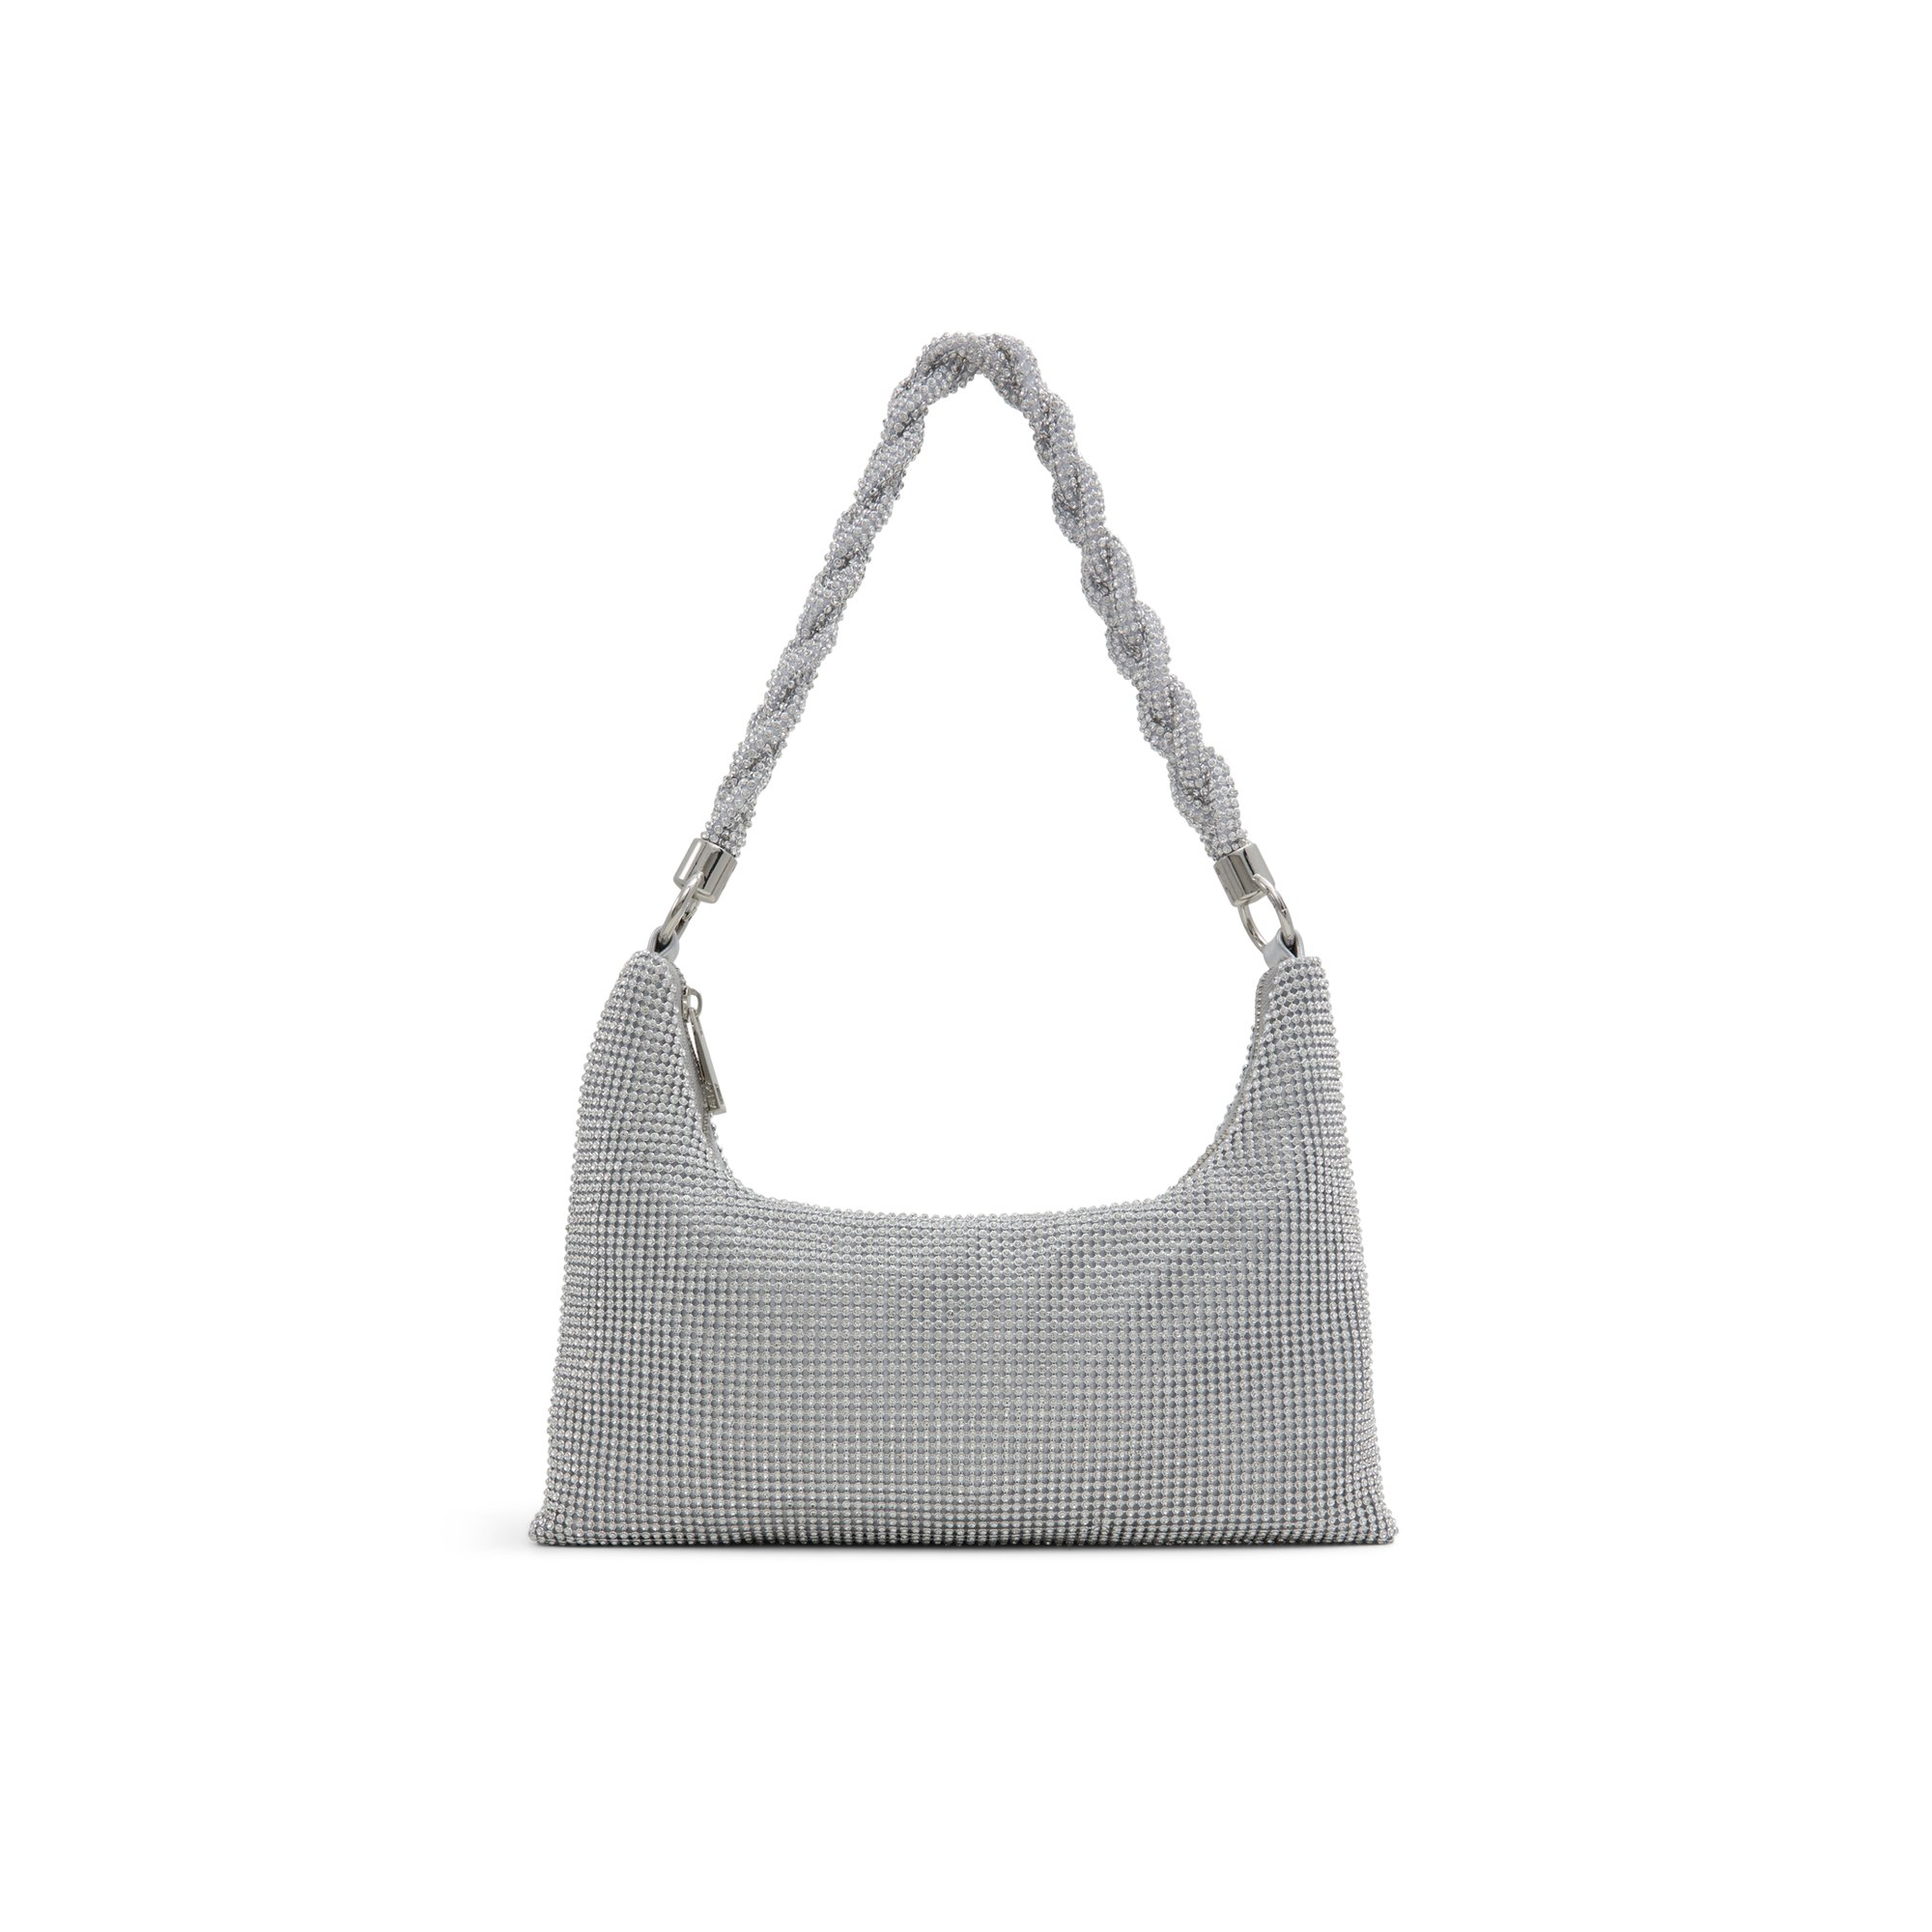 ALDO Marlysax - Women's Shoulder Bag Handbag - Silver